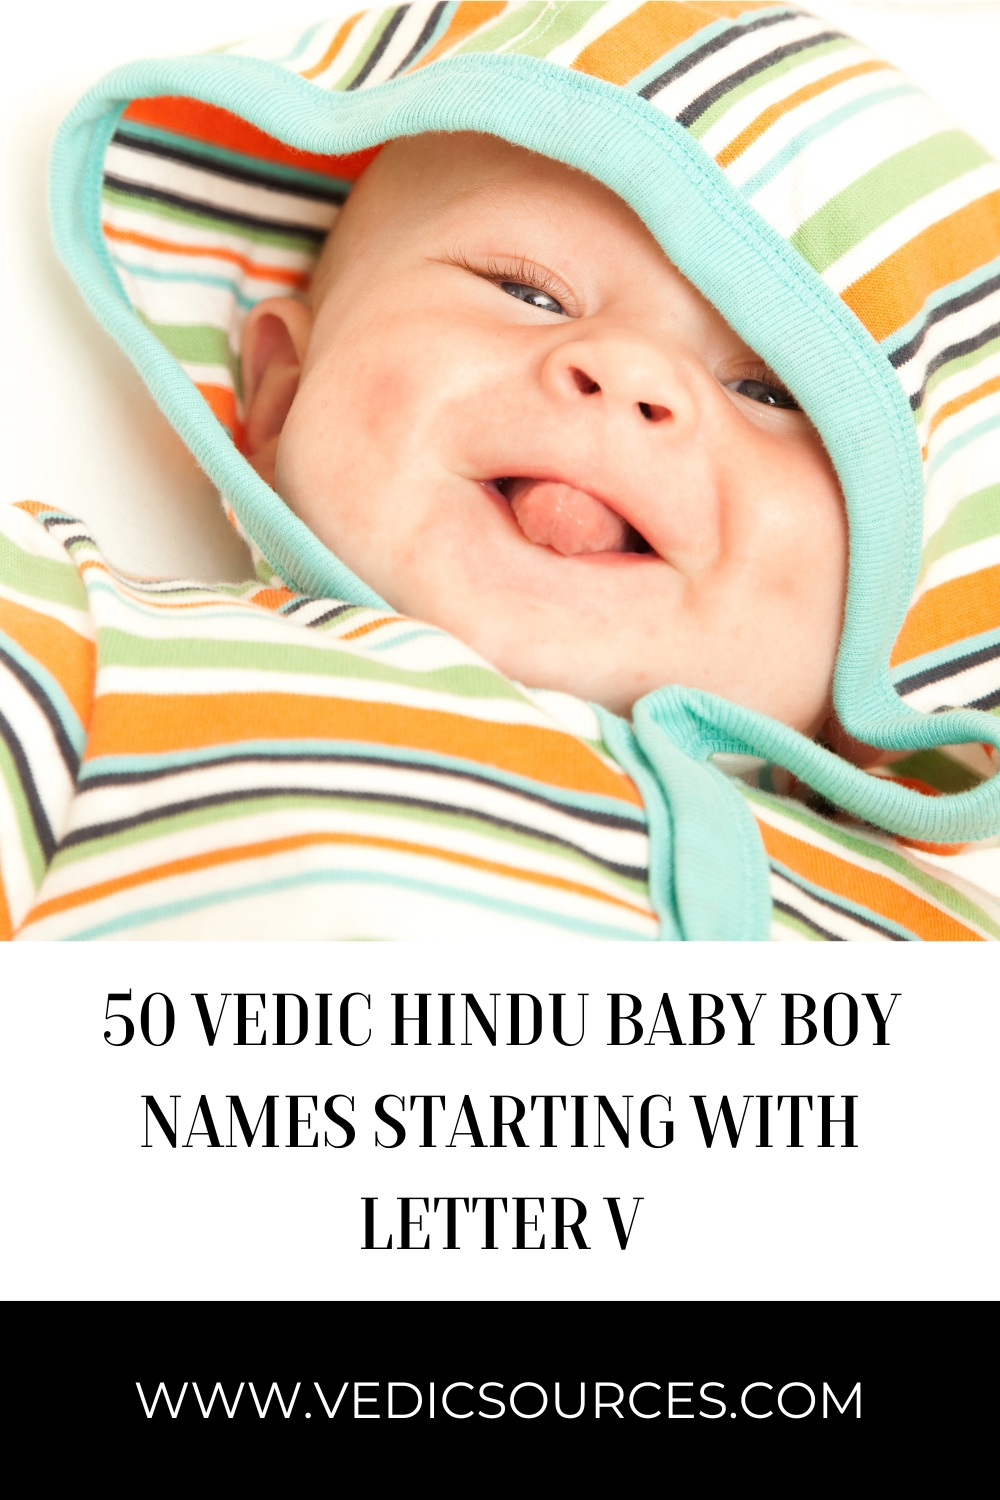 50 Vedic Hindu Baby Boy Names Starting with Letter V